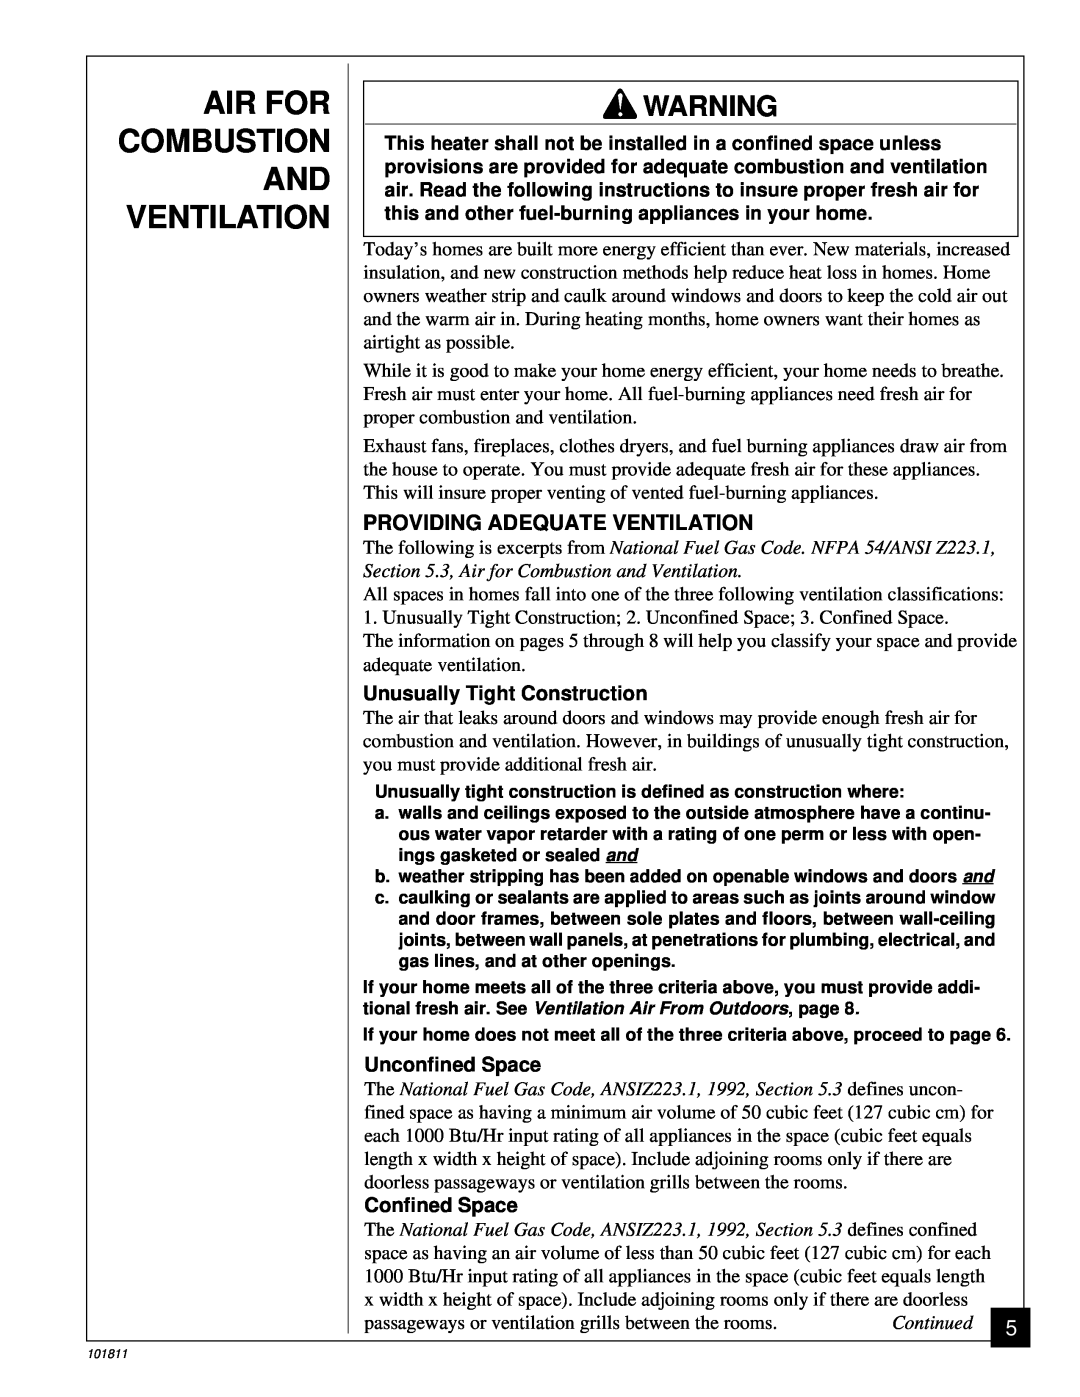 Desa 101811-01C.pdf installation manual Air For Combustion And Ventilation, Providing Adequate Ventilation 